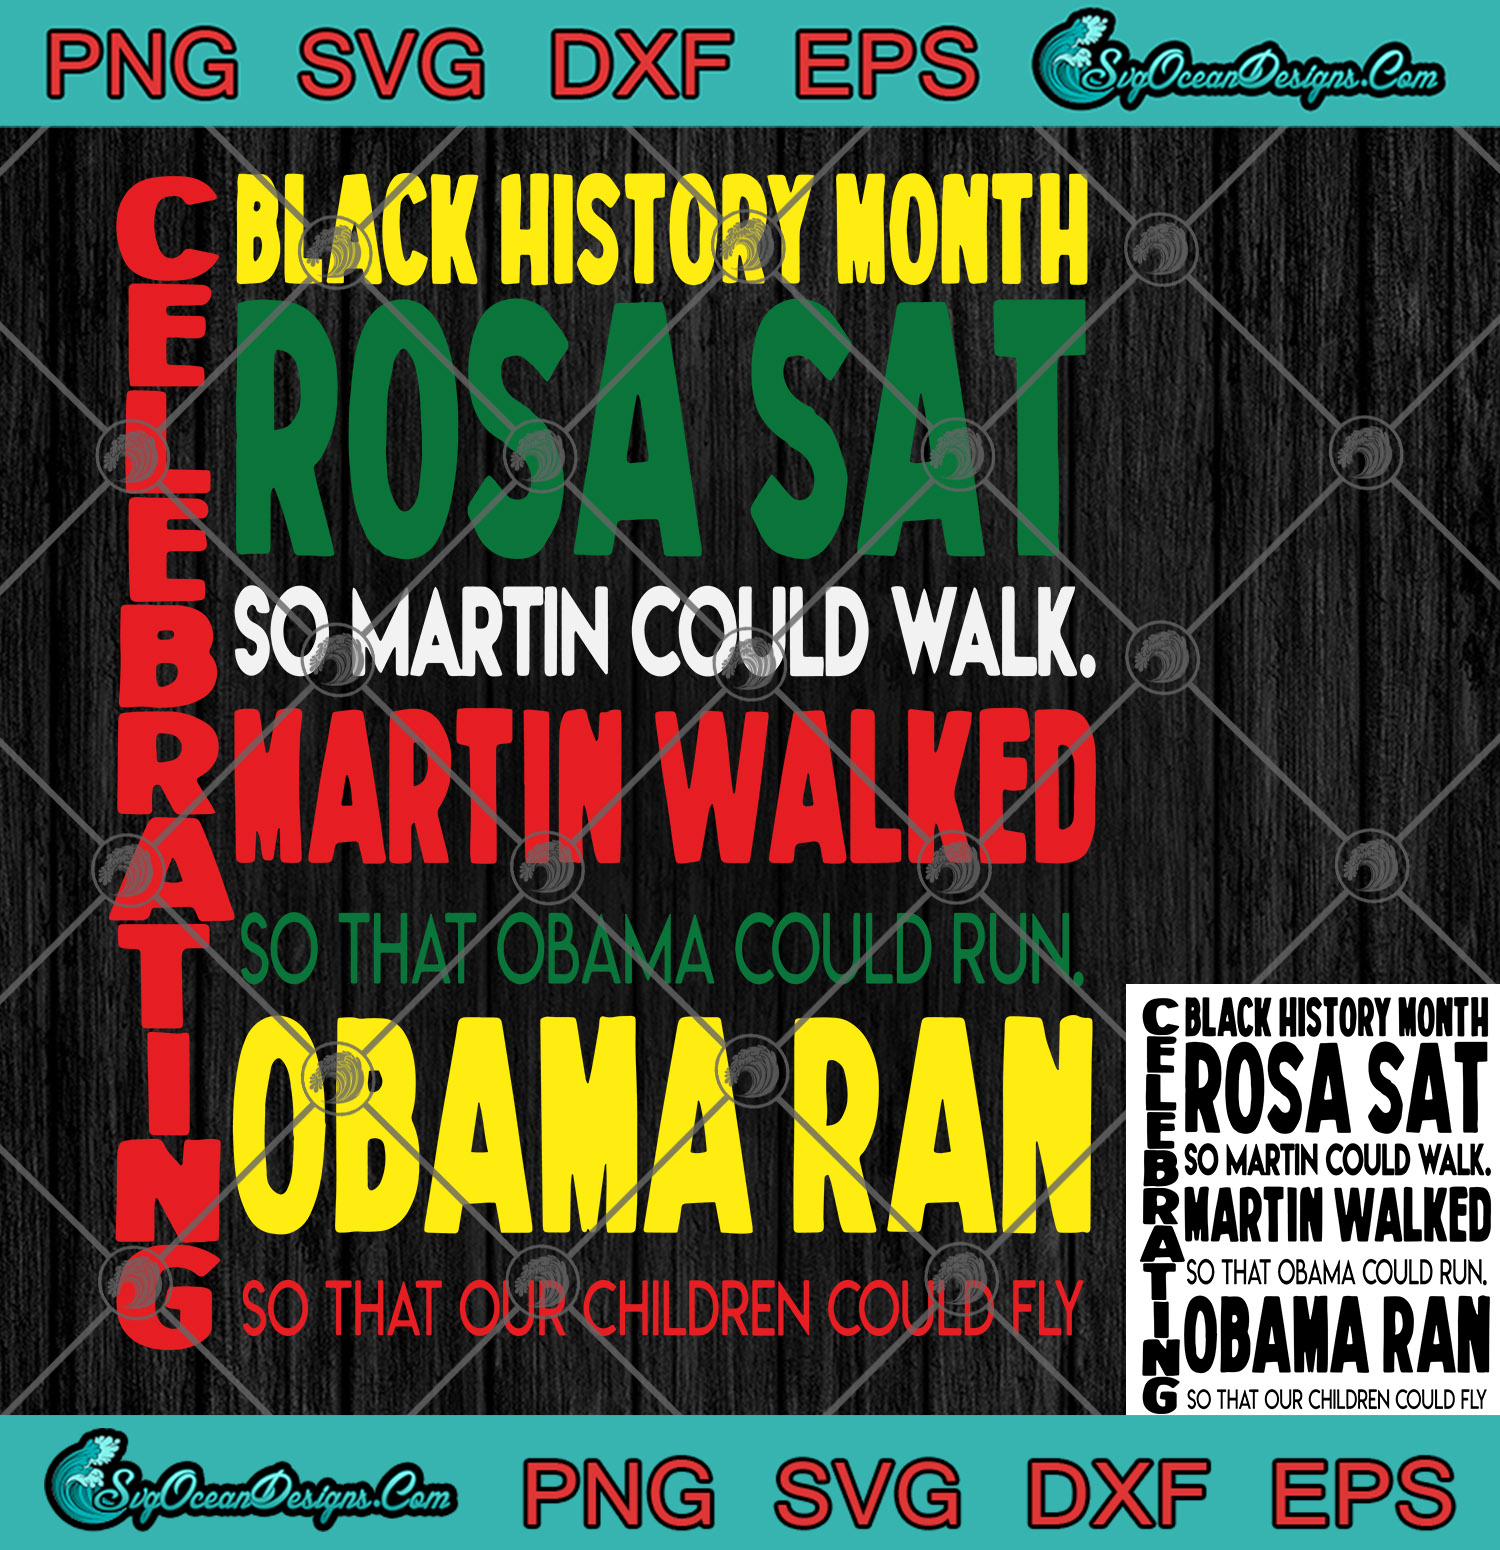 Download Black History Month SVG Celebrate Pride in Black History ...